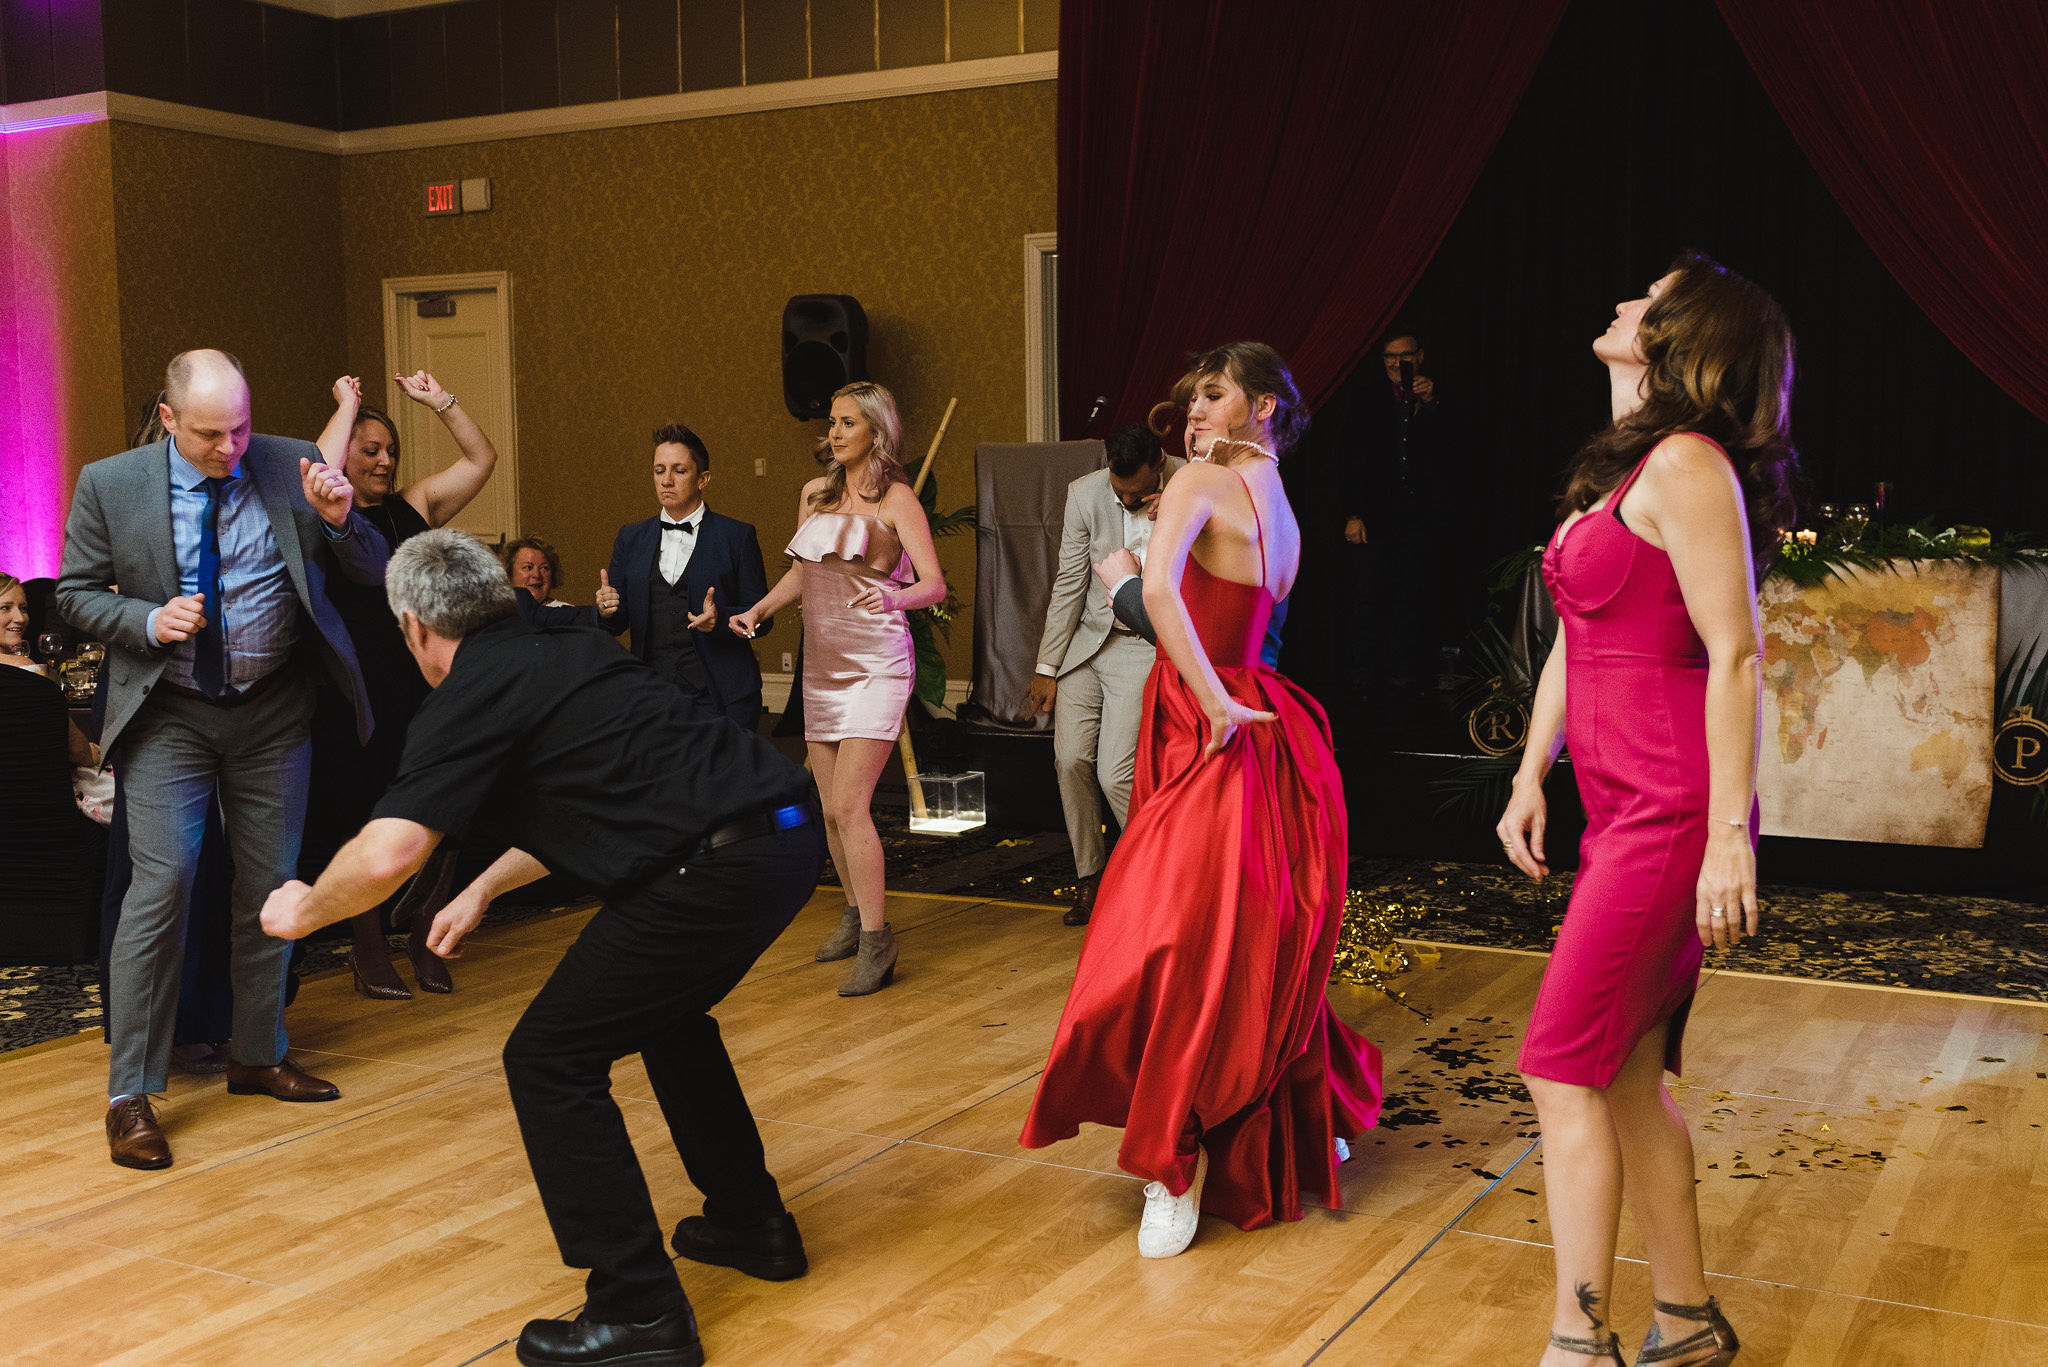 wedding guests dancing during a fun wedding reception at the Hilton Fallsview in Niagara Falls